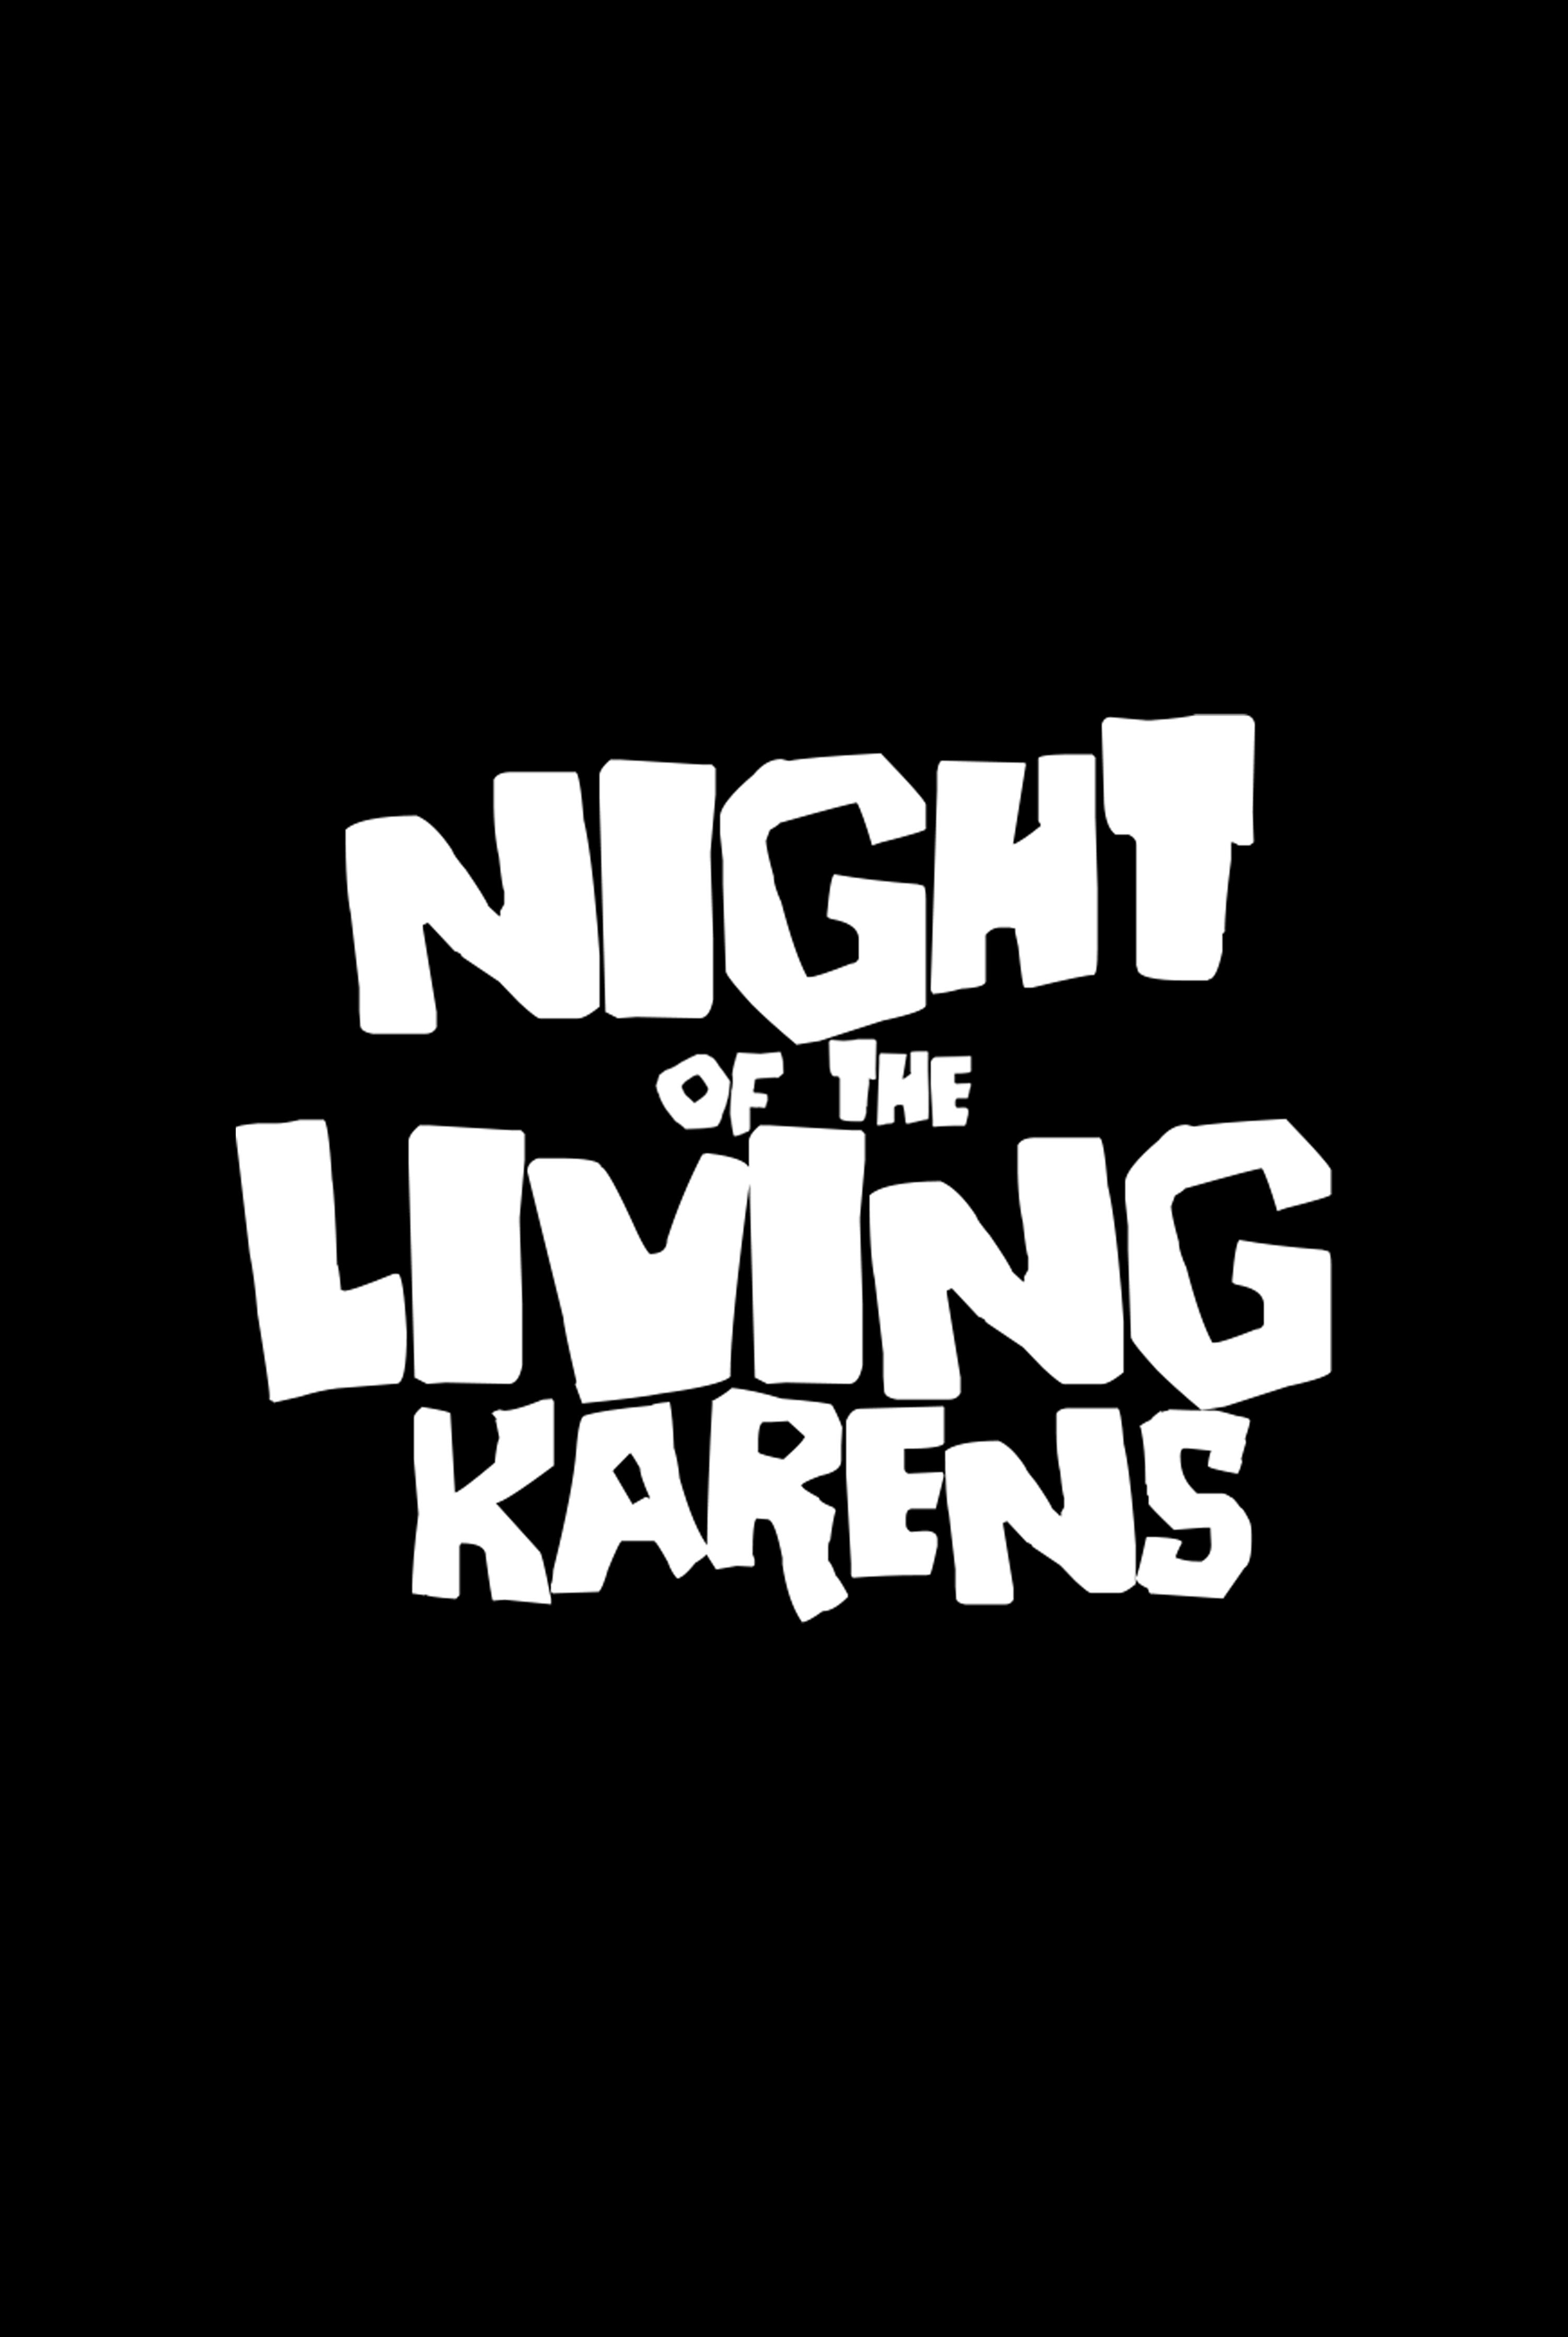 Night of the Living Karens